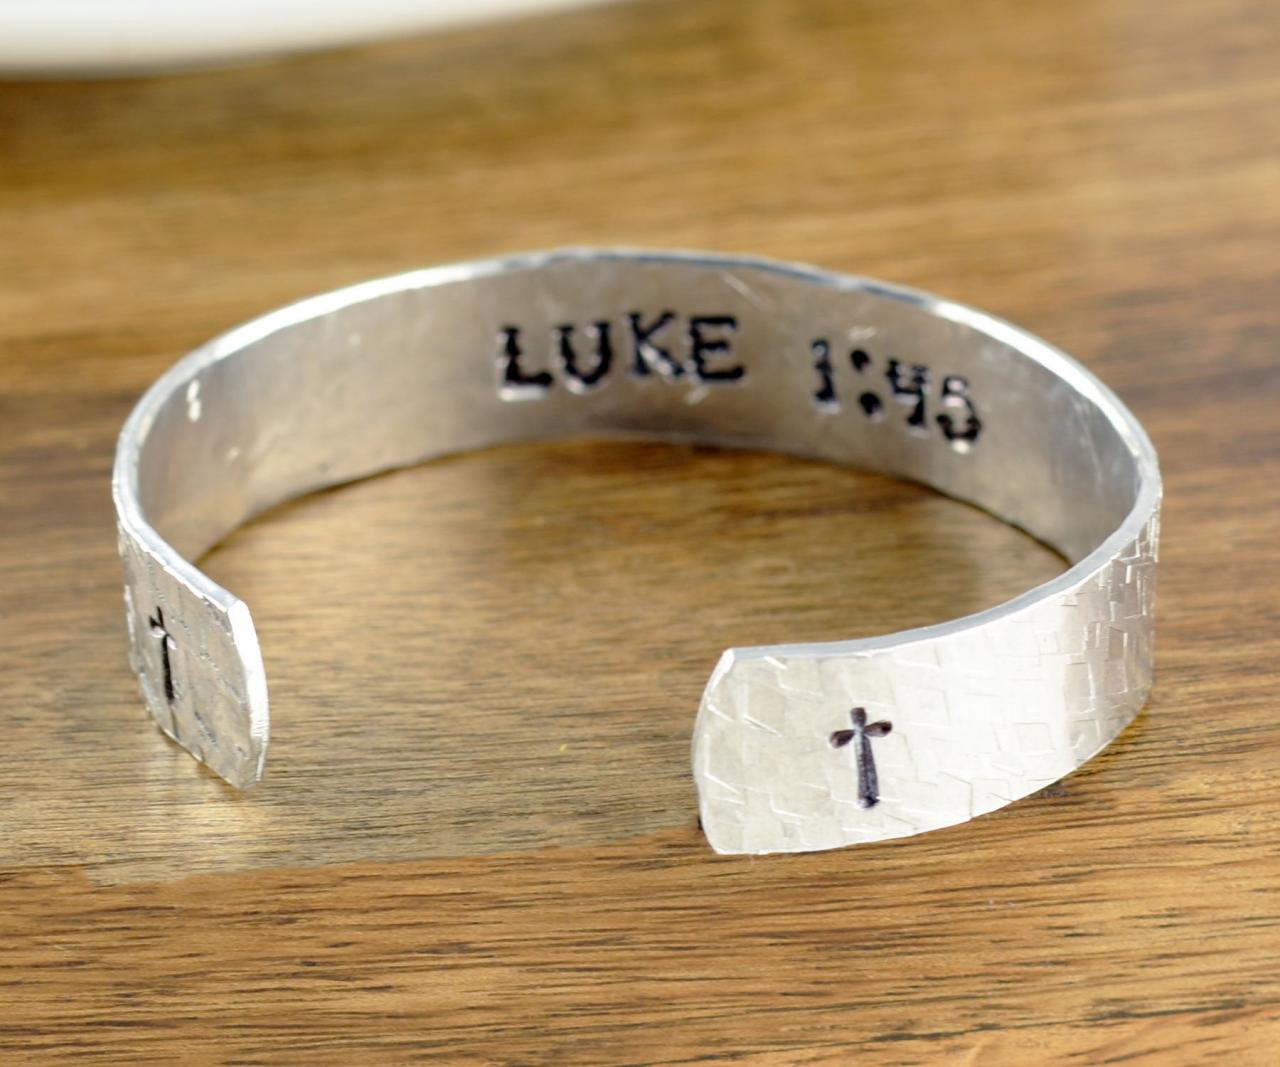 Luke 1:45, Blessed Is She Who Has Believed, Bible Verse Bracelet, Scripture Bracelet, Personalized Gift, Christian Bracelet, Scripture Gift